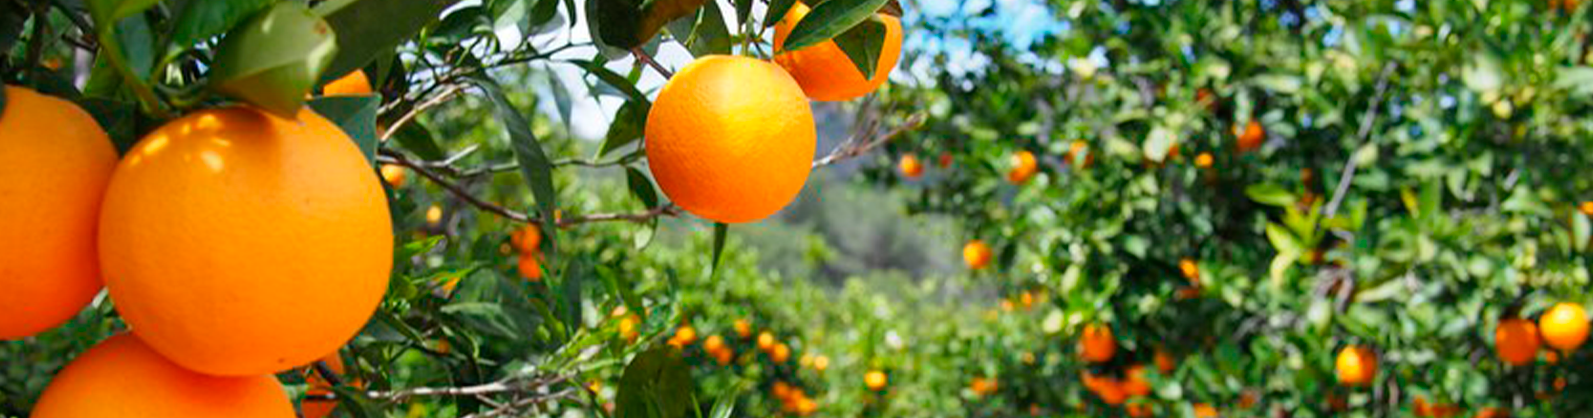 Citros/Cepea: Clima limita demanda; preço da laranja recua